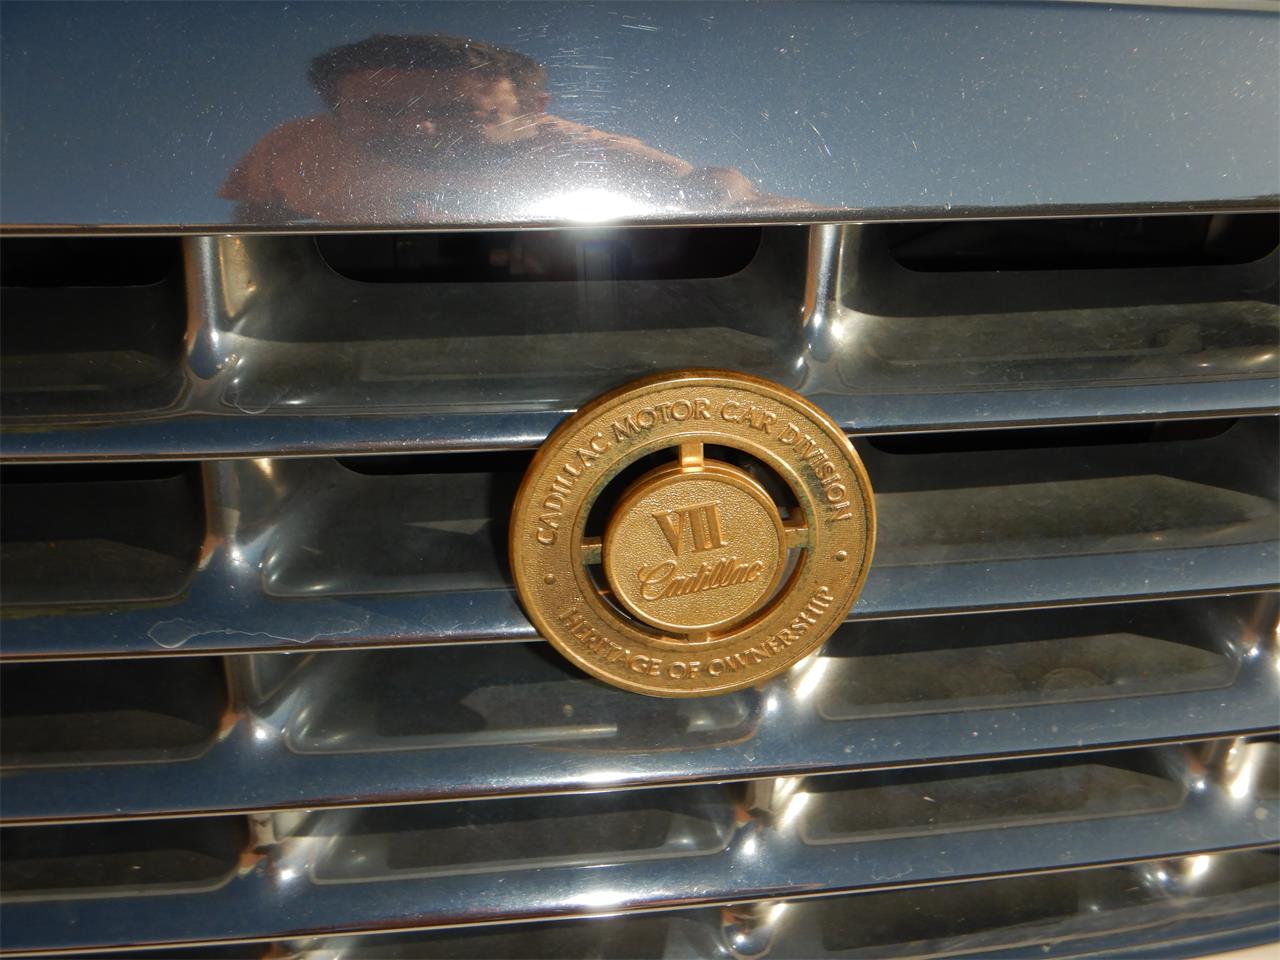 1997 Cadillac Sedan DeVille for sale in Woodland Hills, CA – photo 8